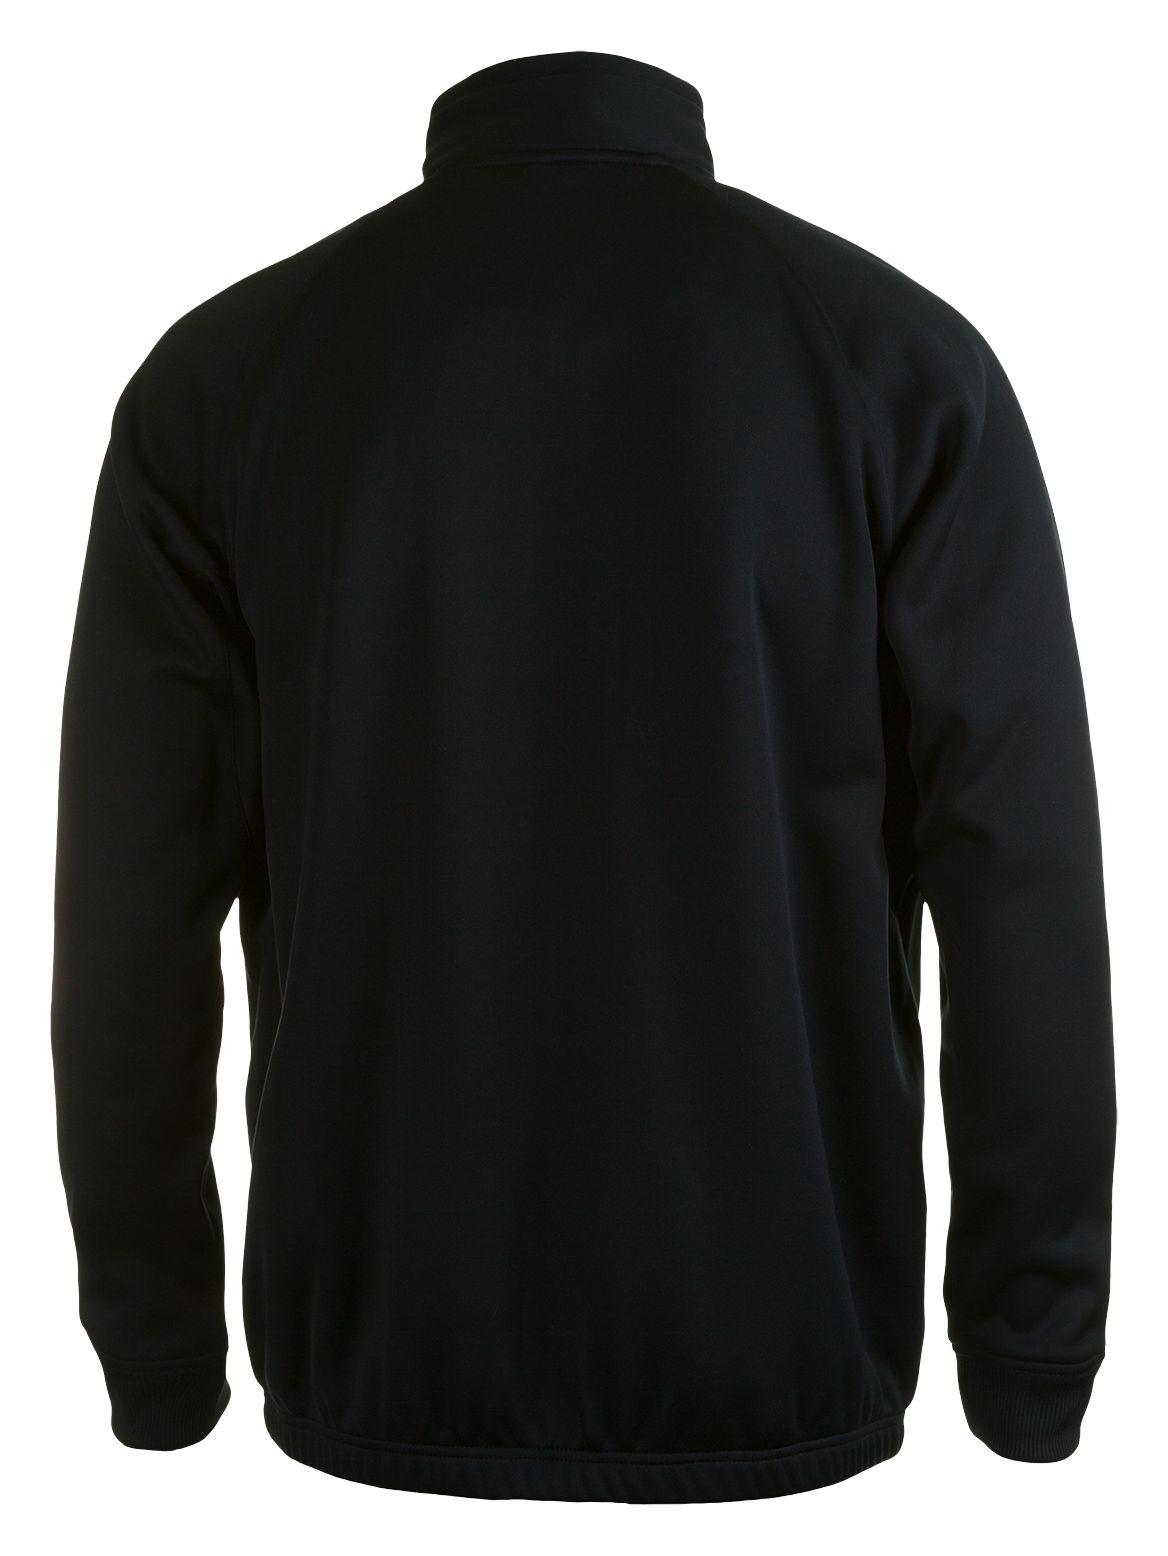 LFC Walkout Jacket, Black image number 2